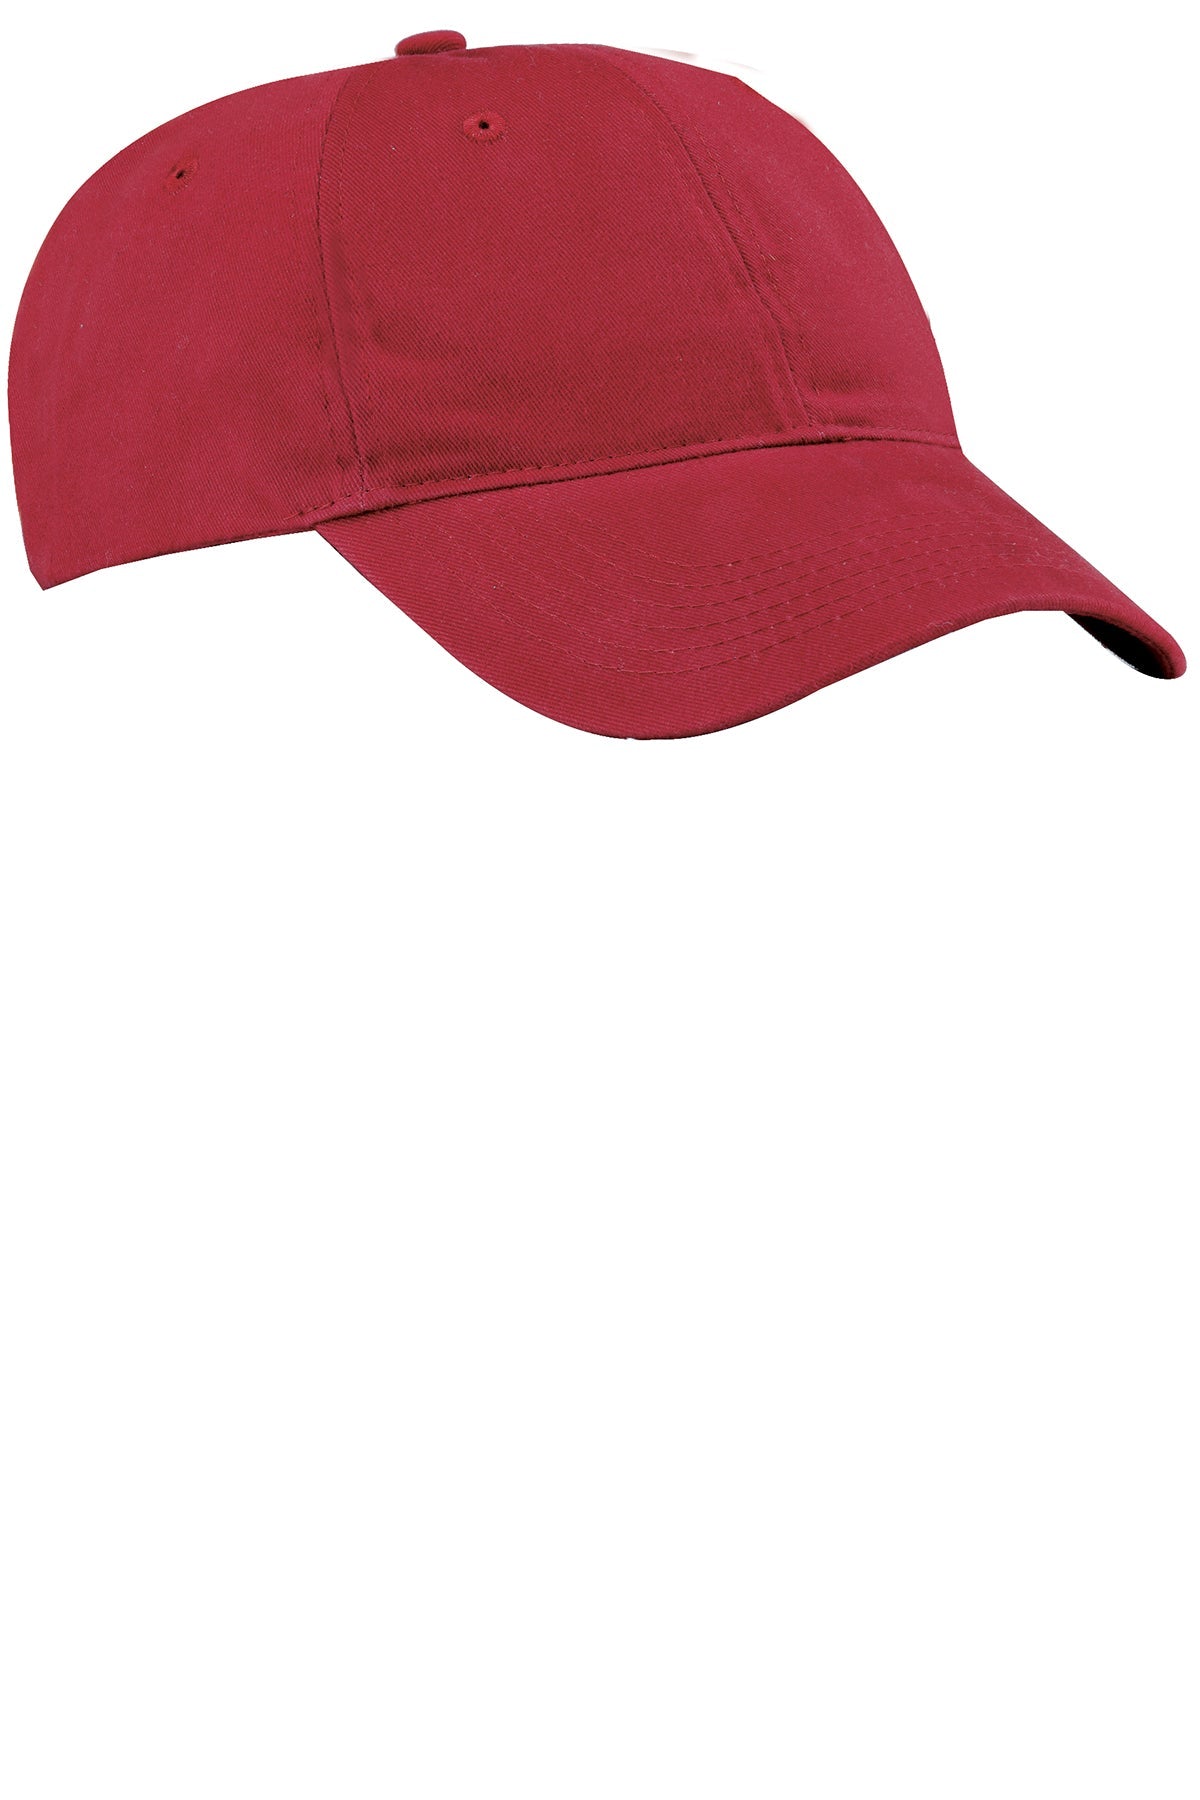 Port & Company Brushed Twill Custom Caps, Red